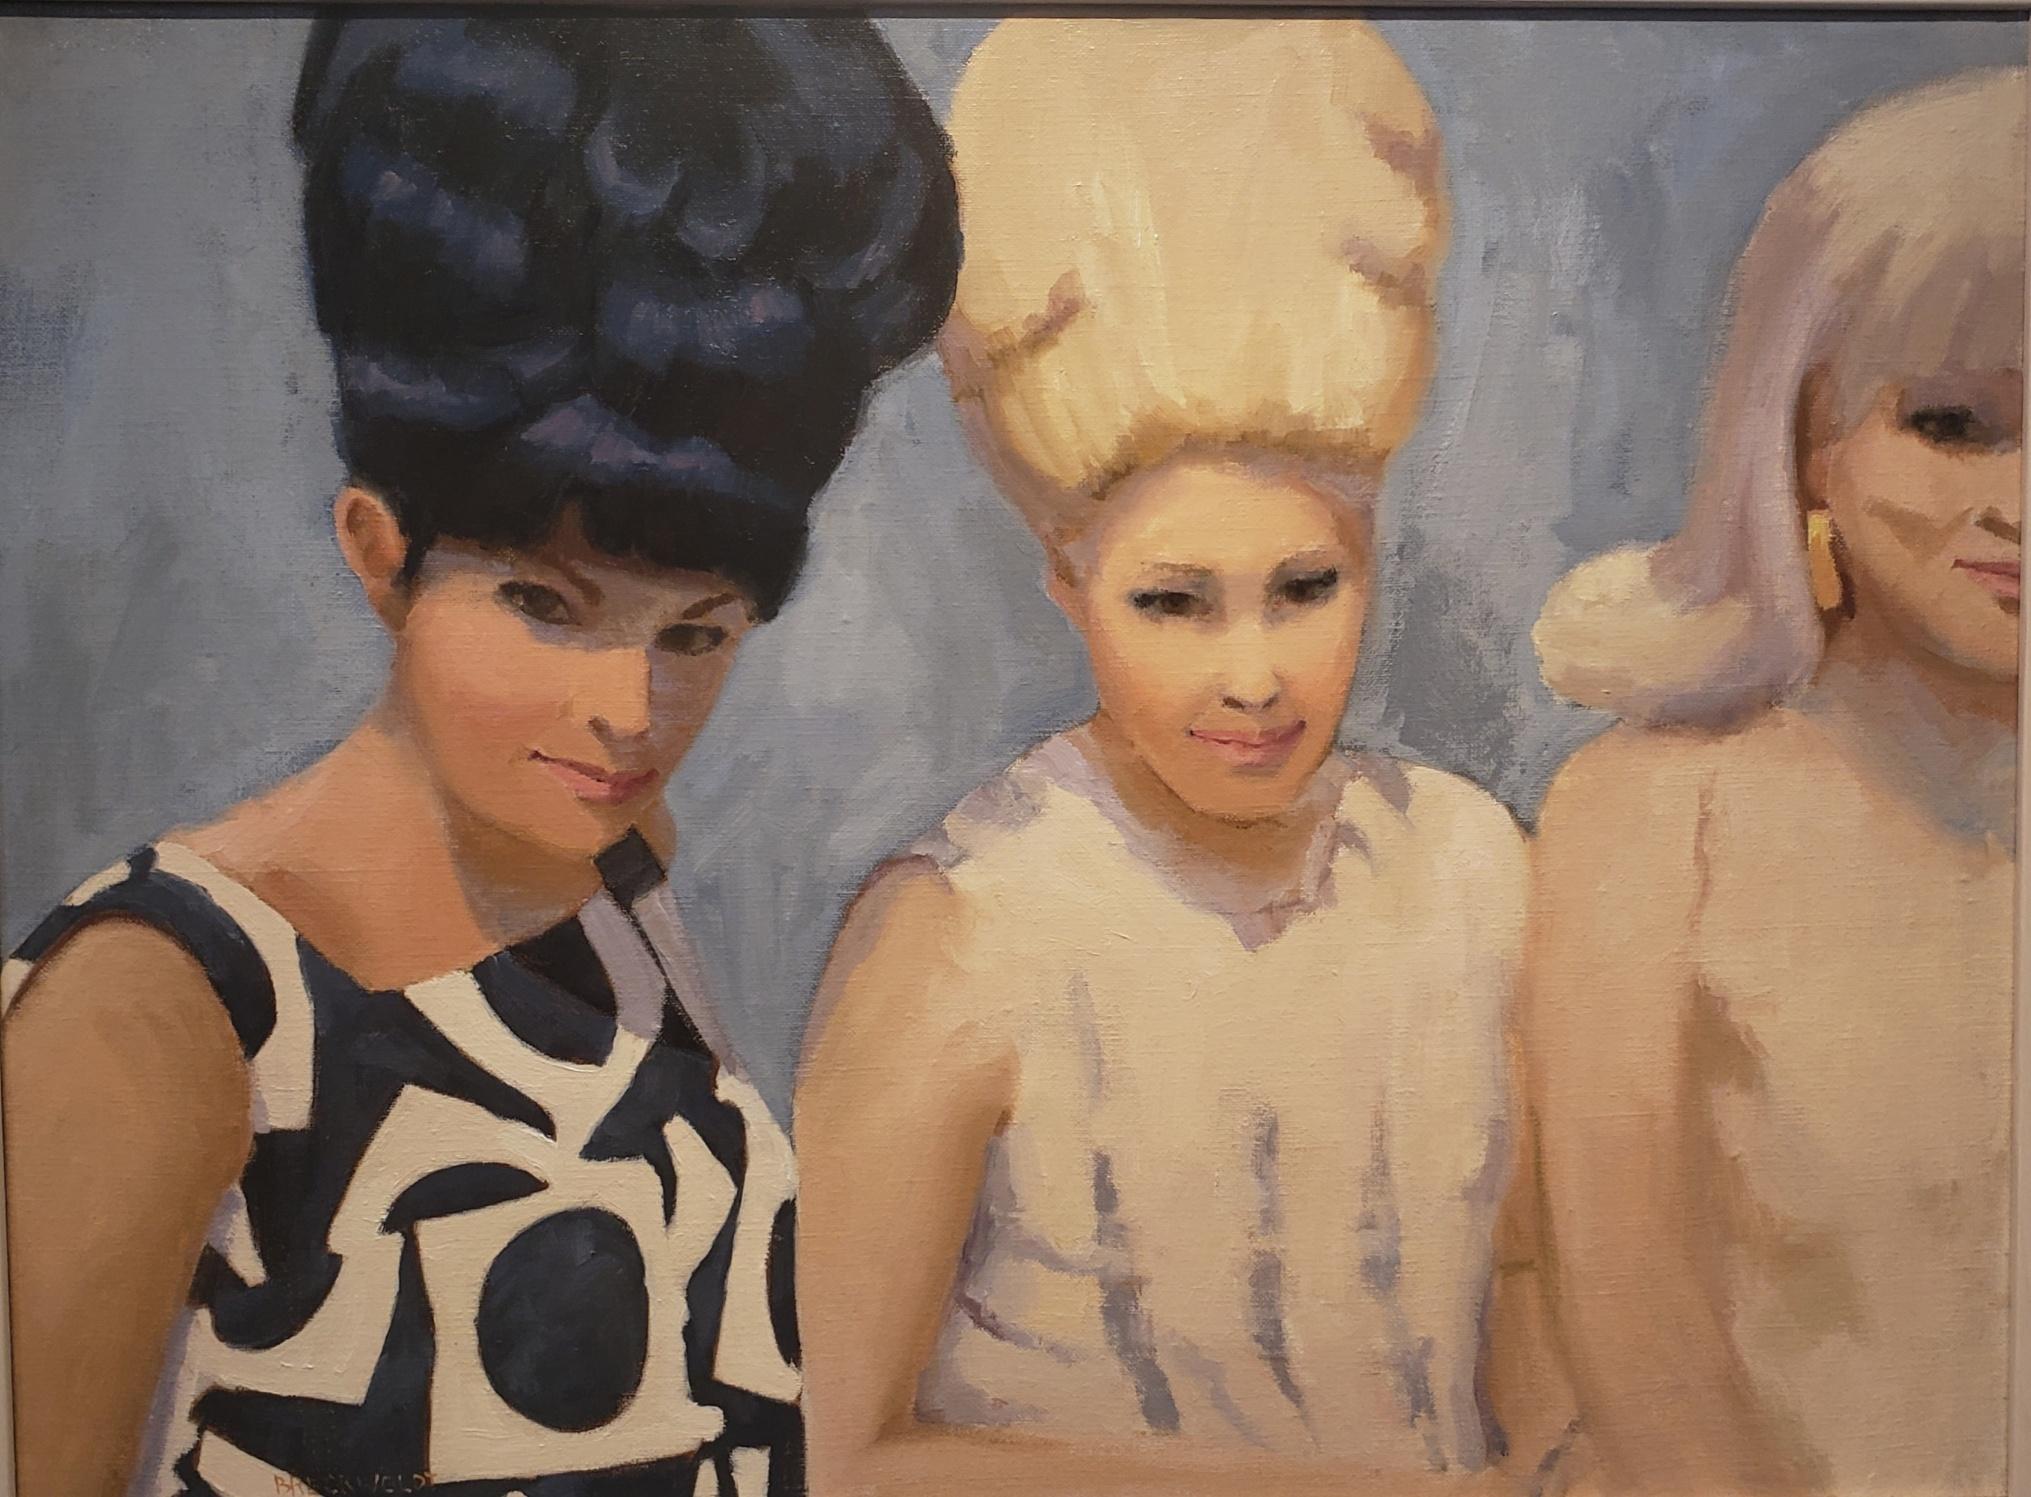 Joan Breckwoldt Portrait Painting - Beehives, Figurative, Texas artist, Women in the Arts, Portraits, 60's Hair